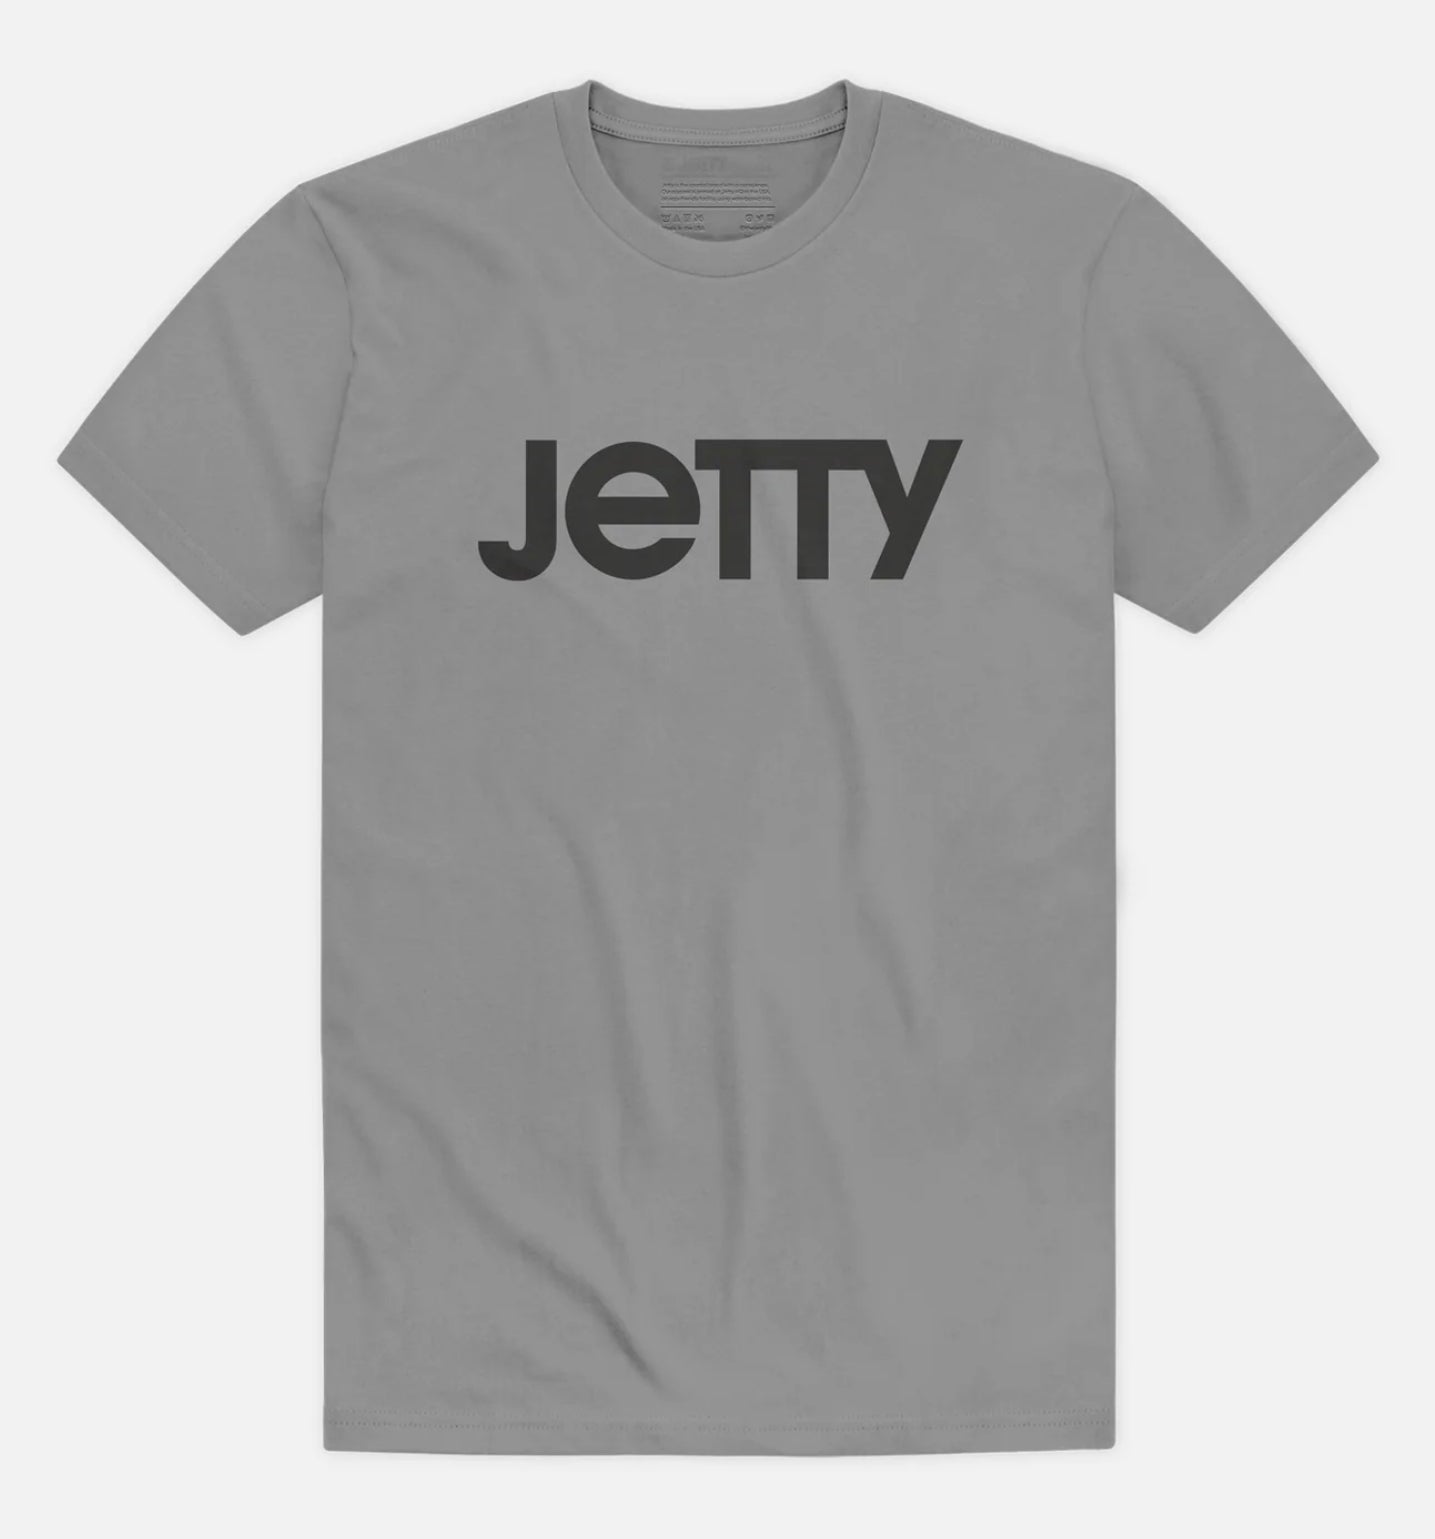 Jetty - Starboard Logo Tee